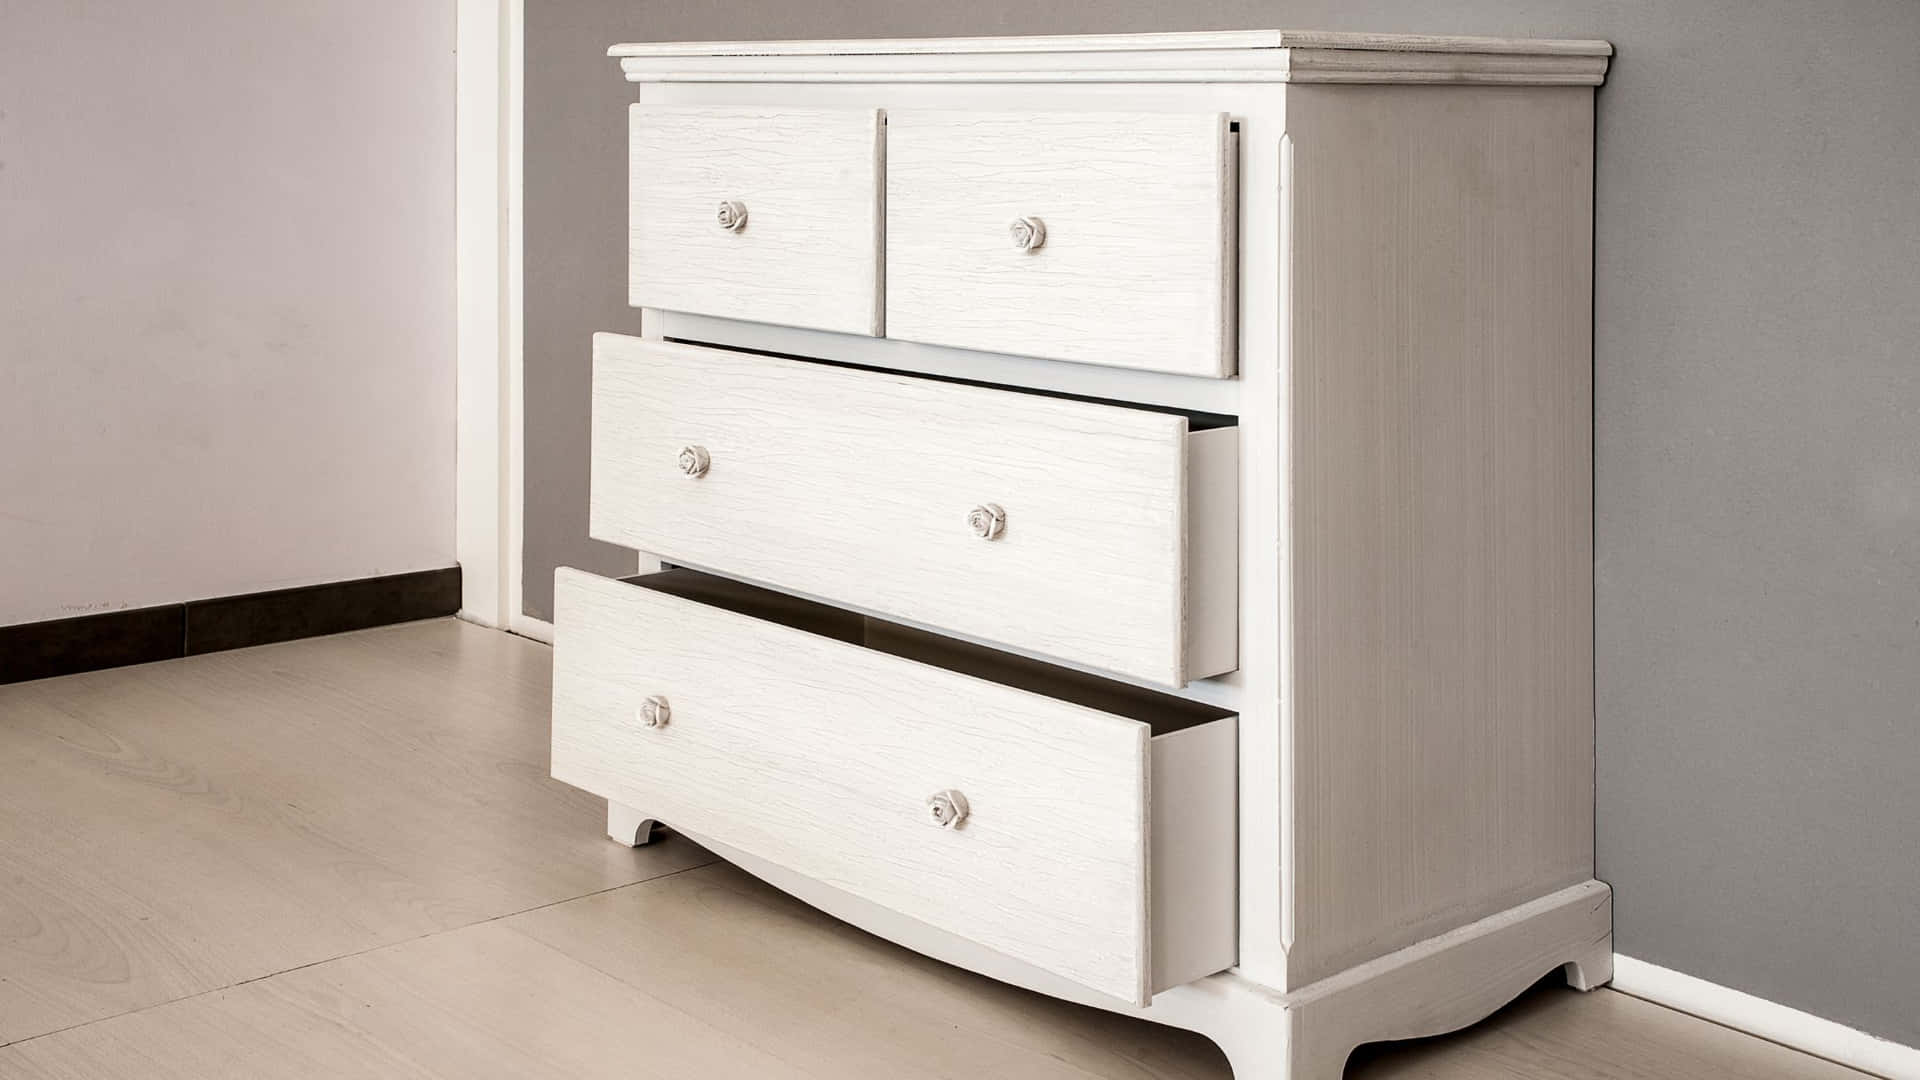 Acquire premium quality furniture pieces to revamp your space